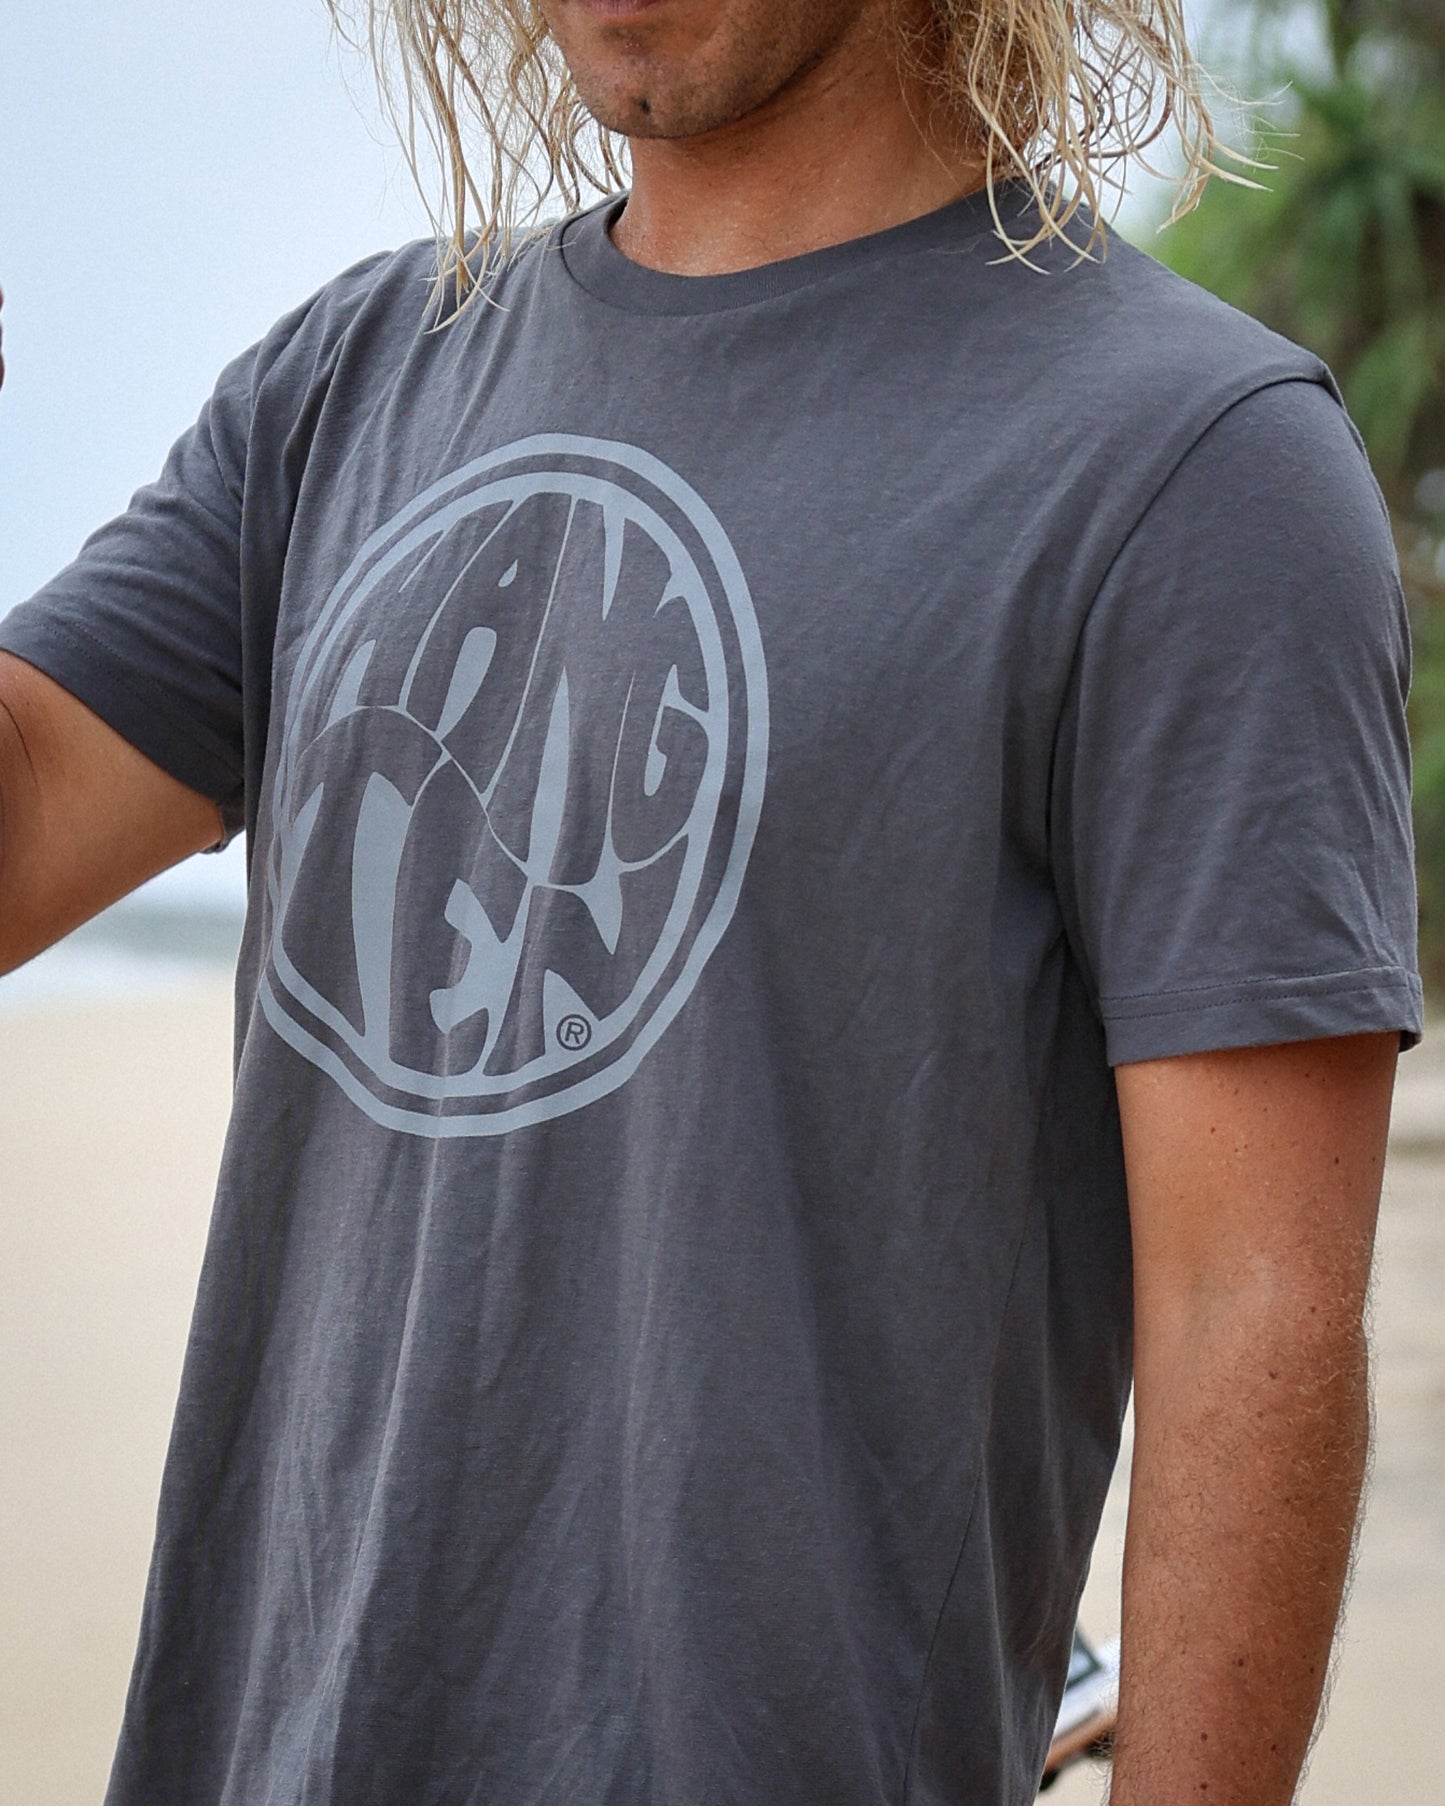 Hang Ten Surfer T-shirt - Anthracite Grey